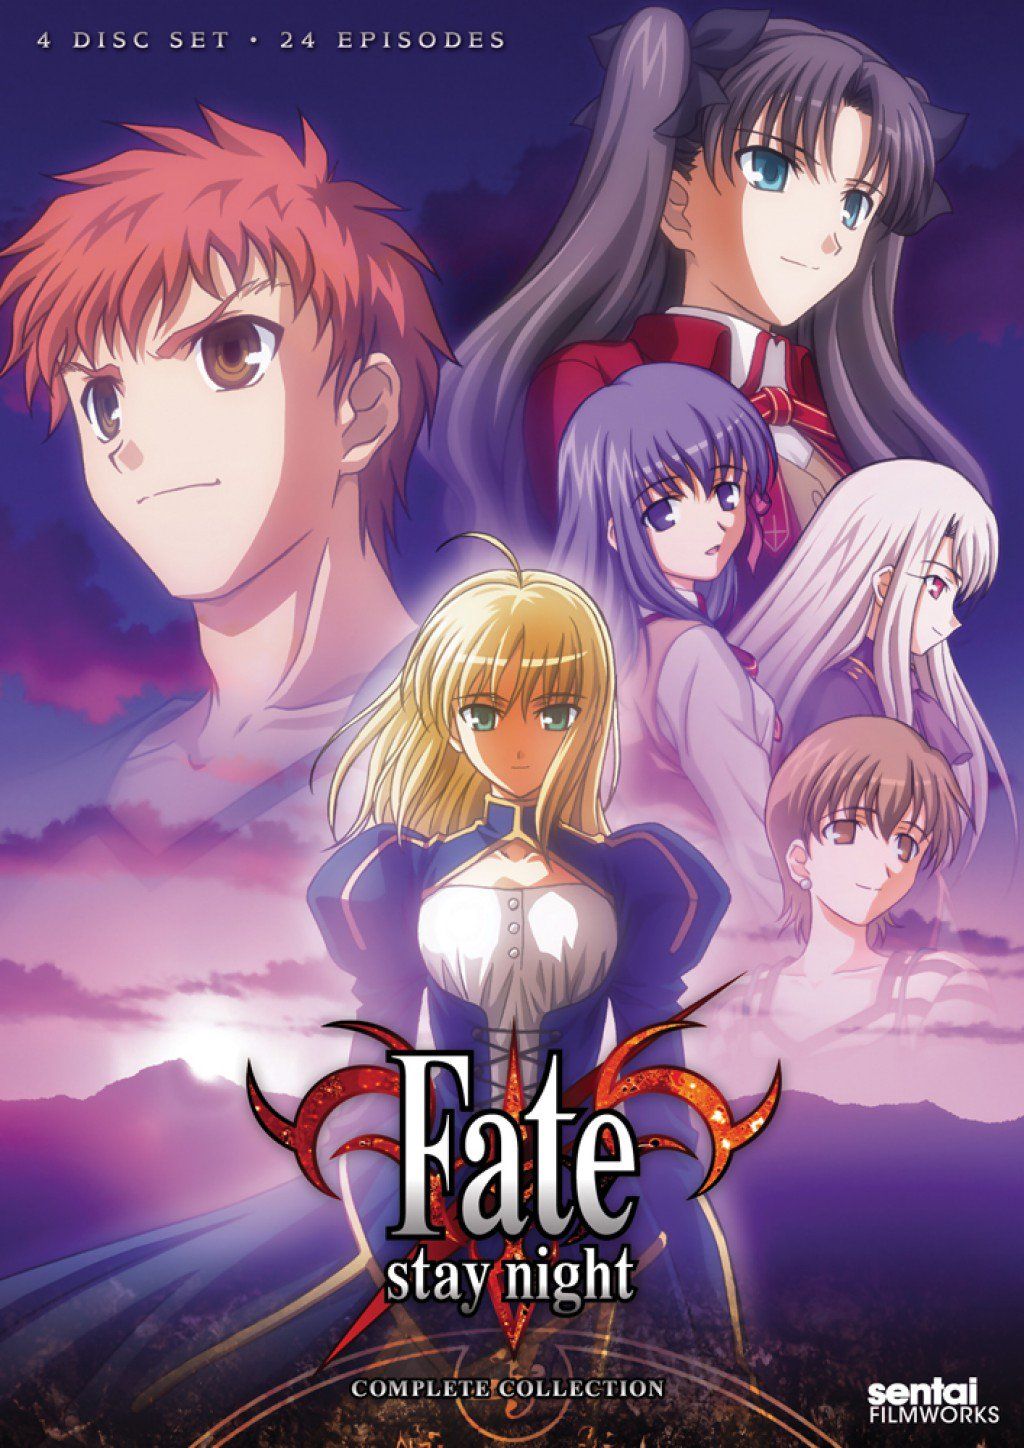 Aimer  Brave Shine Fatestay night Unlimited Blade Works OP2  Anime  Liryca